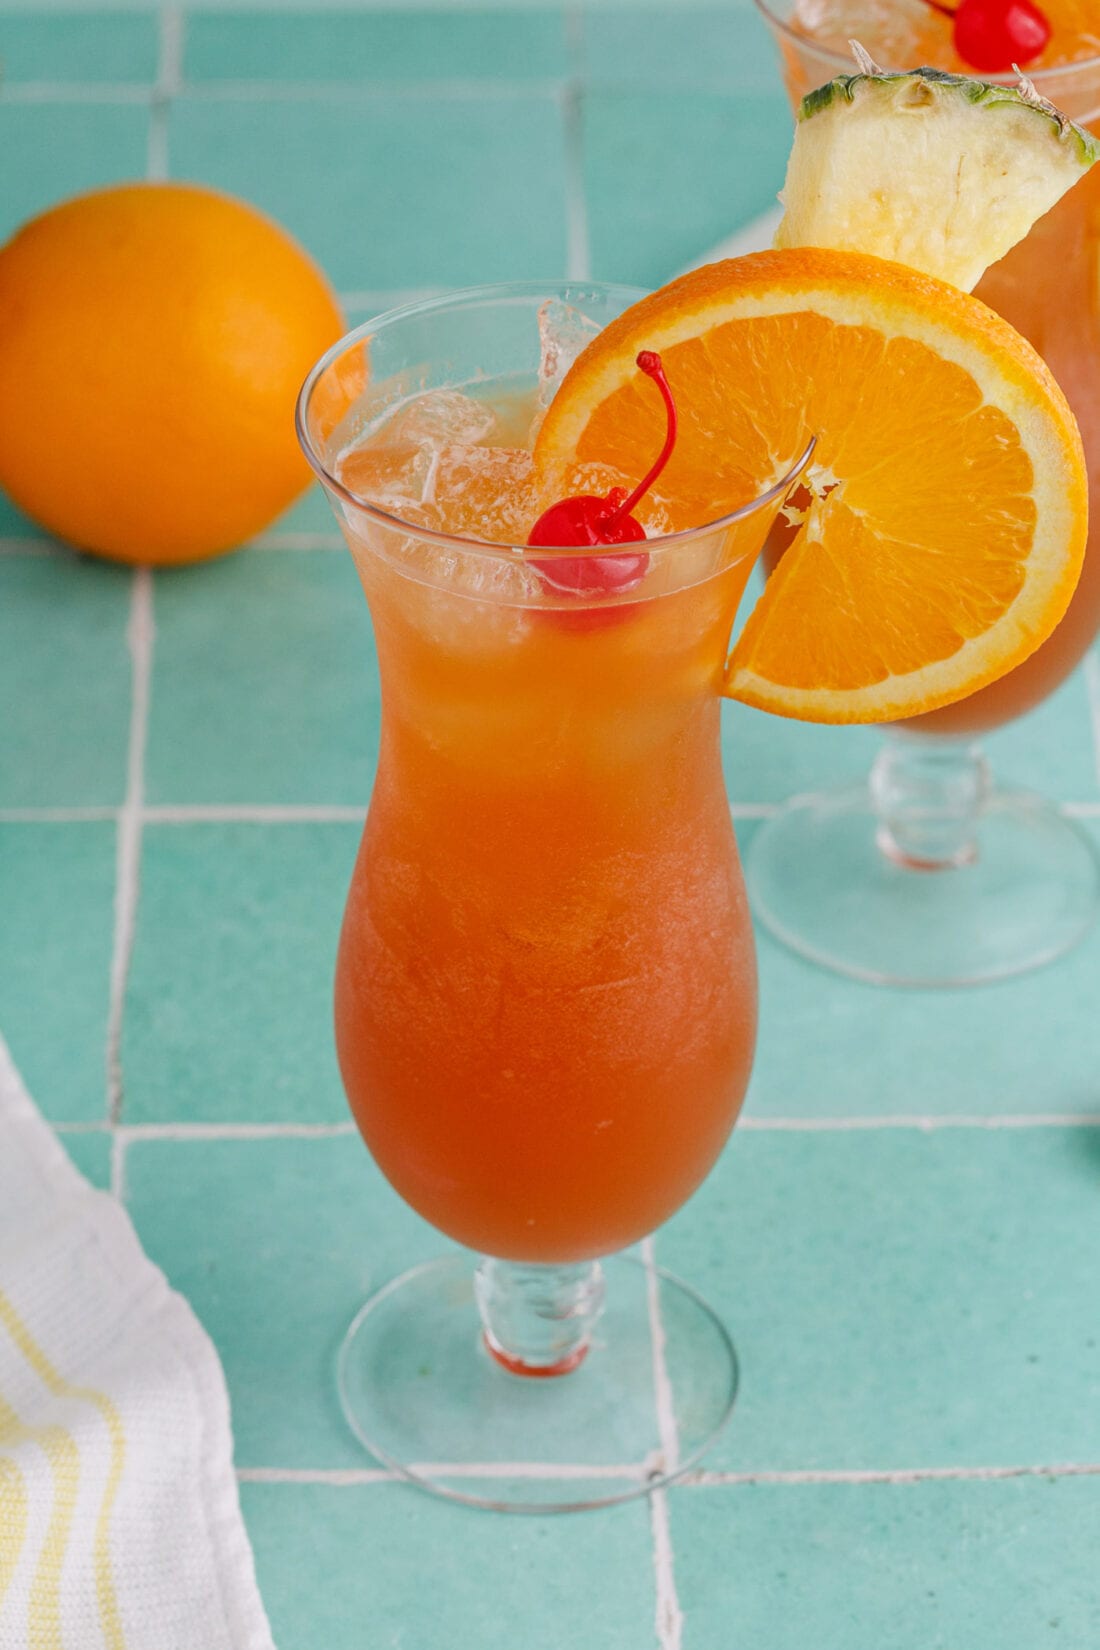 Rum Runner garnished with an orange wheel, pineapple wedge and cherry